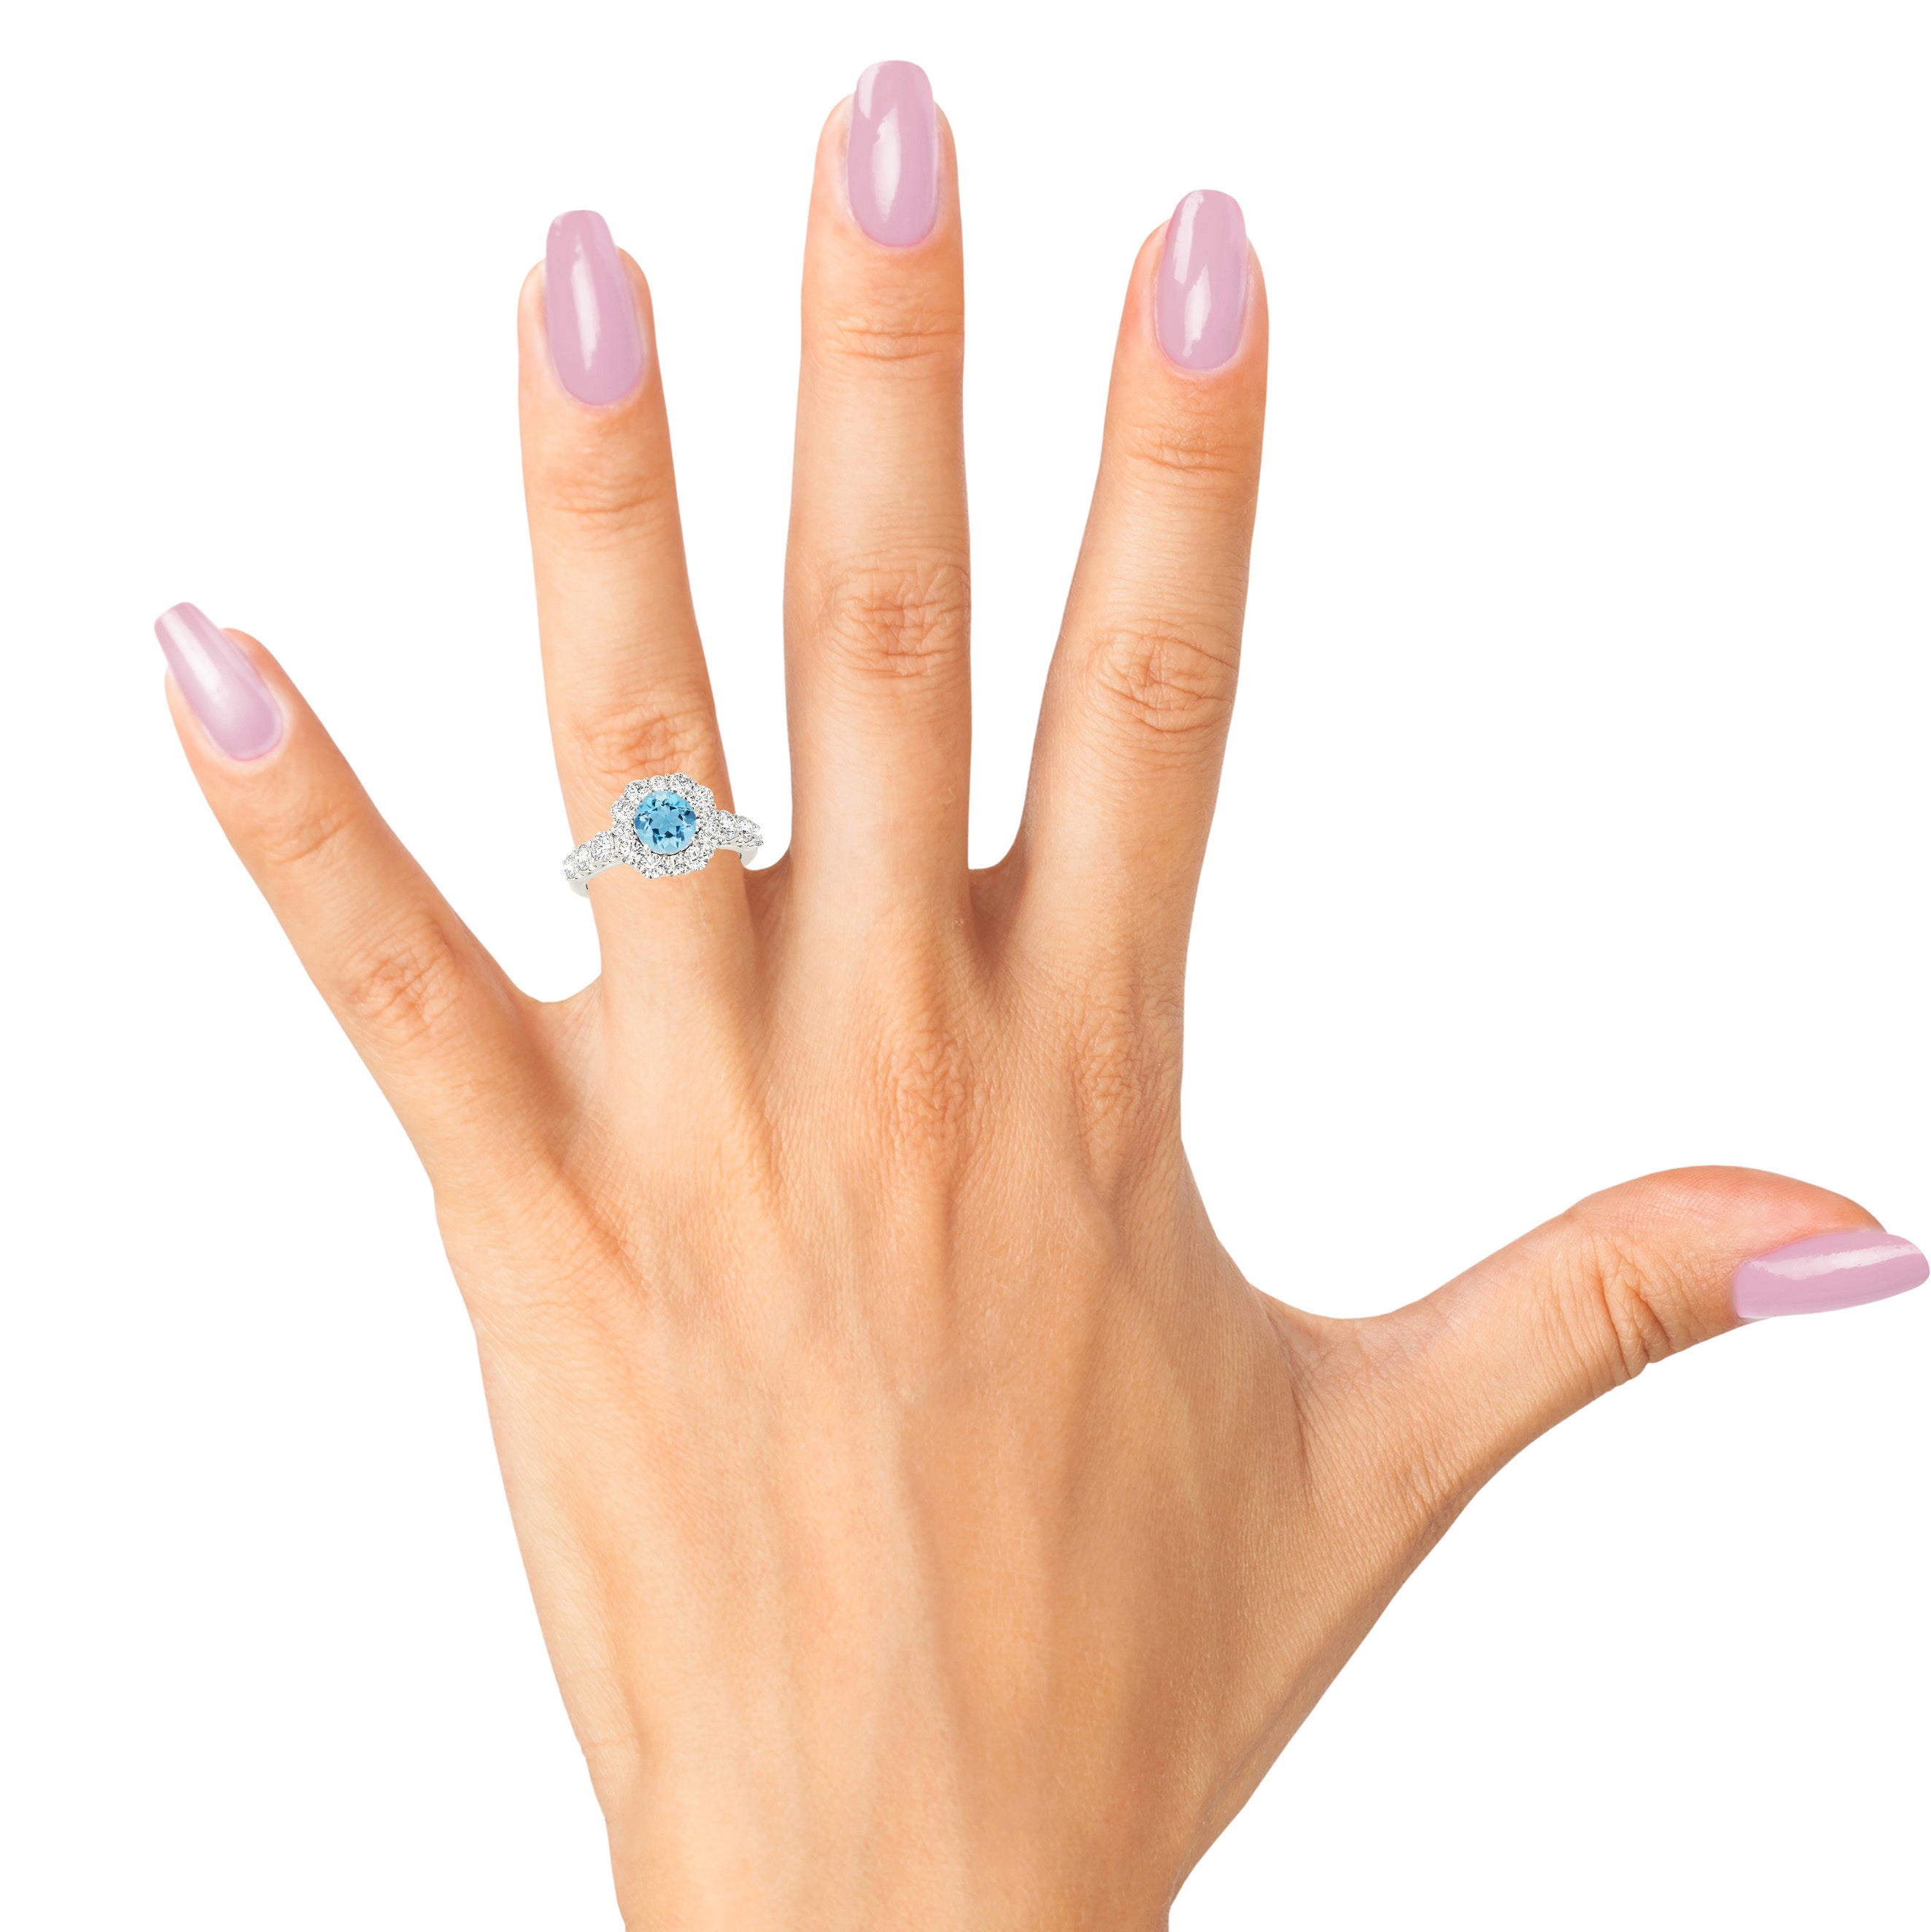 1.10 ct. Genuine Aquamarine Ring With 1.10 ctw. Diamond Floral Halo And Fancy Diamond Band | Round Blue Aquamarine Halo Ring-in 14K/18K White, Yellow, Rose Gold and Platinum - Christmas Jewelry Gift -VIRABYANI